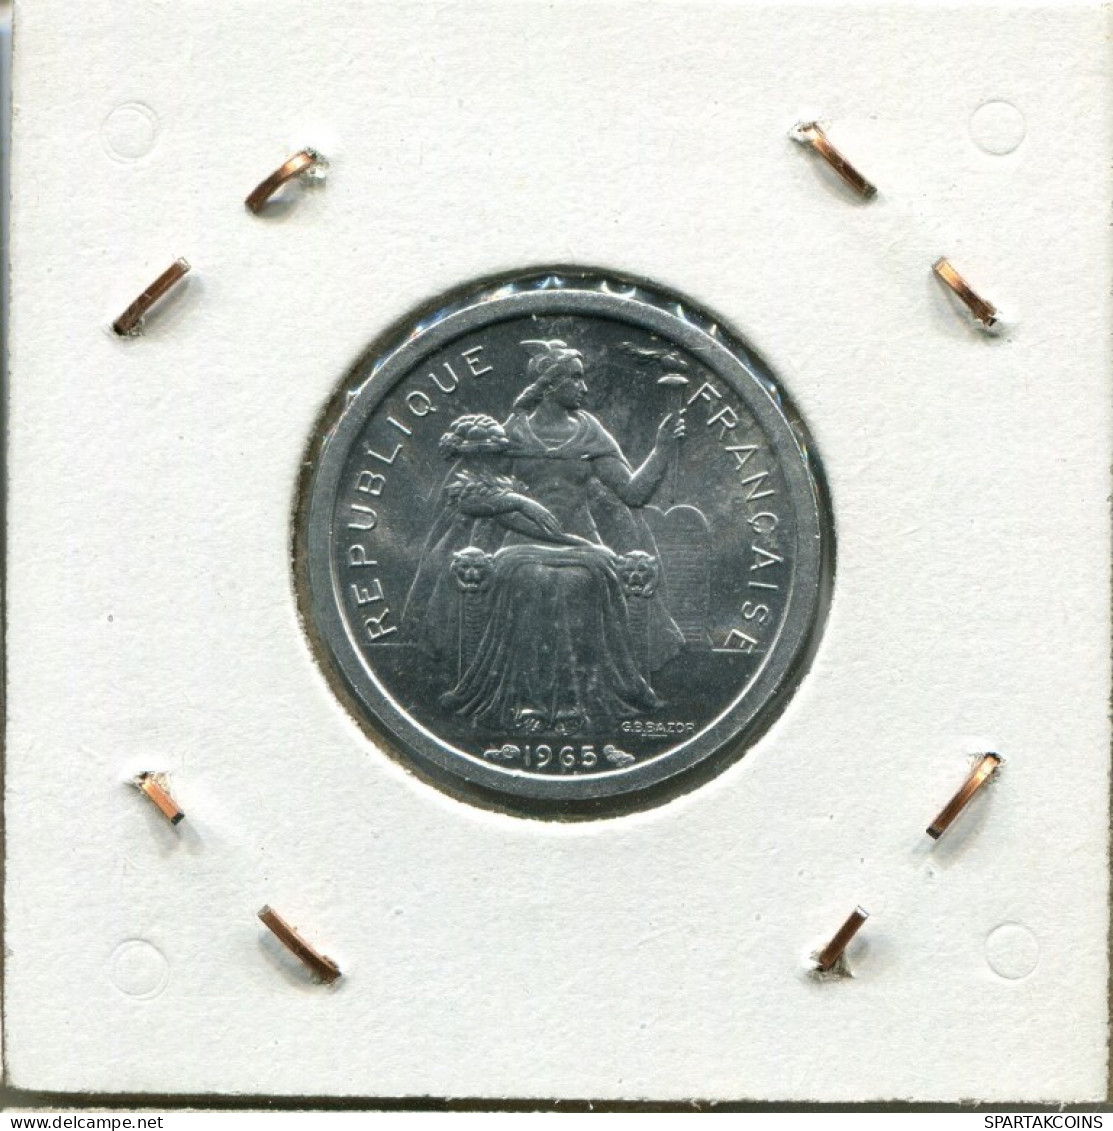 1 FRANC 1965 Französisch POLYNESIA Koloniale Münze #AM501.D.A - French Polynesia